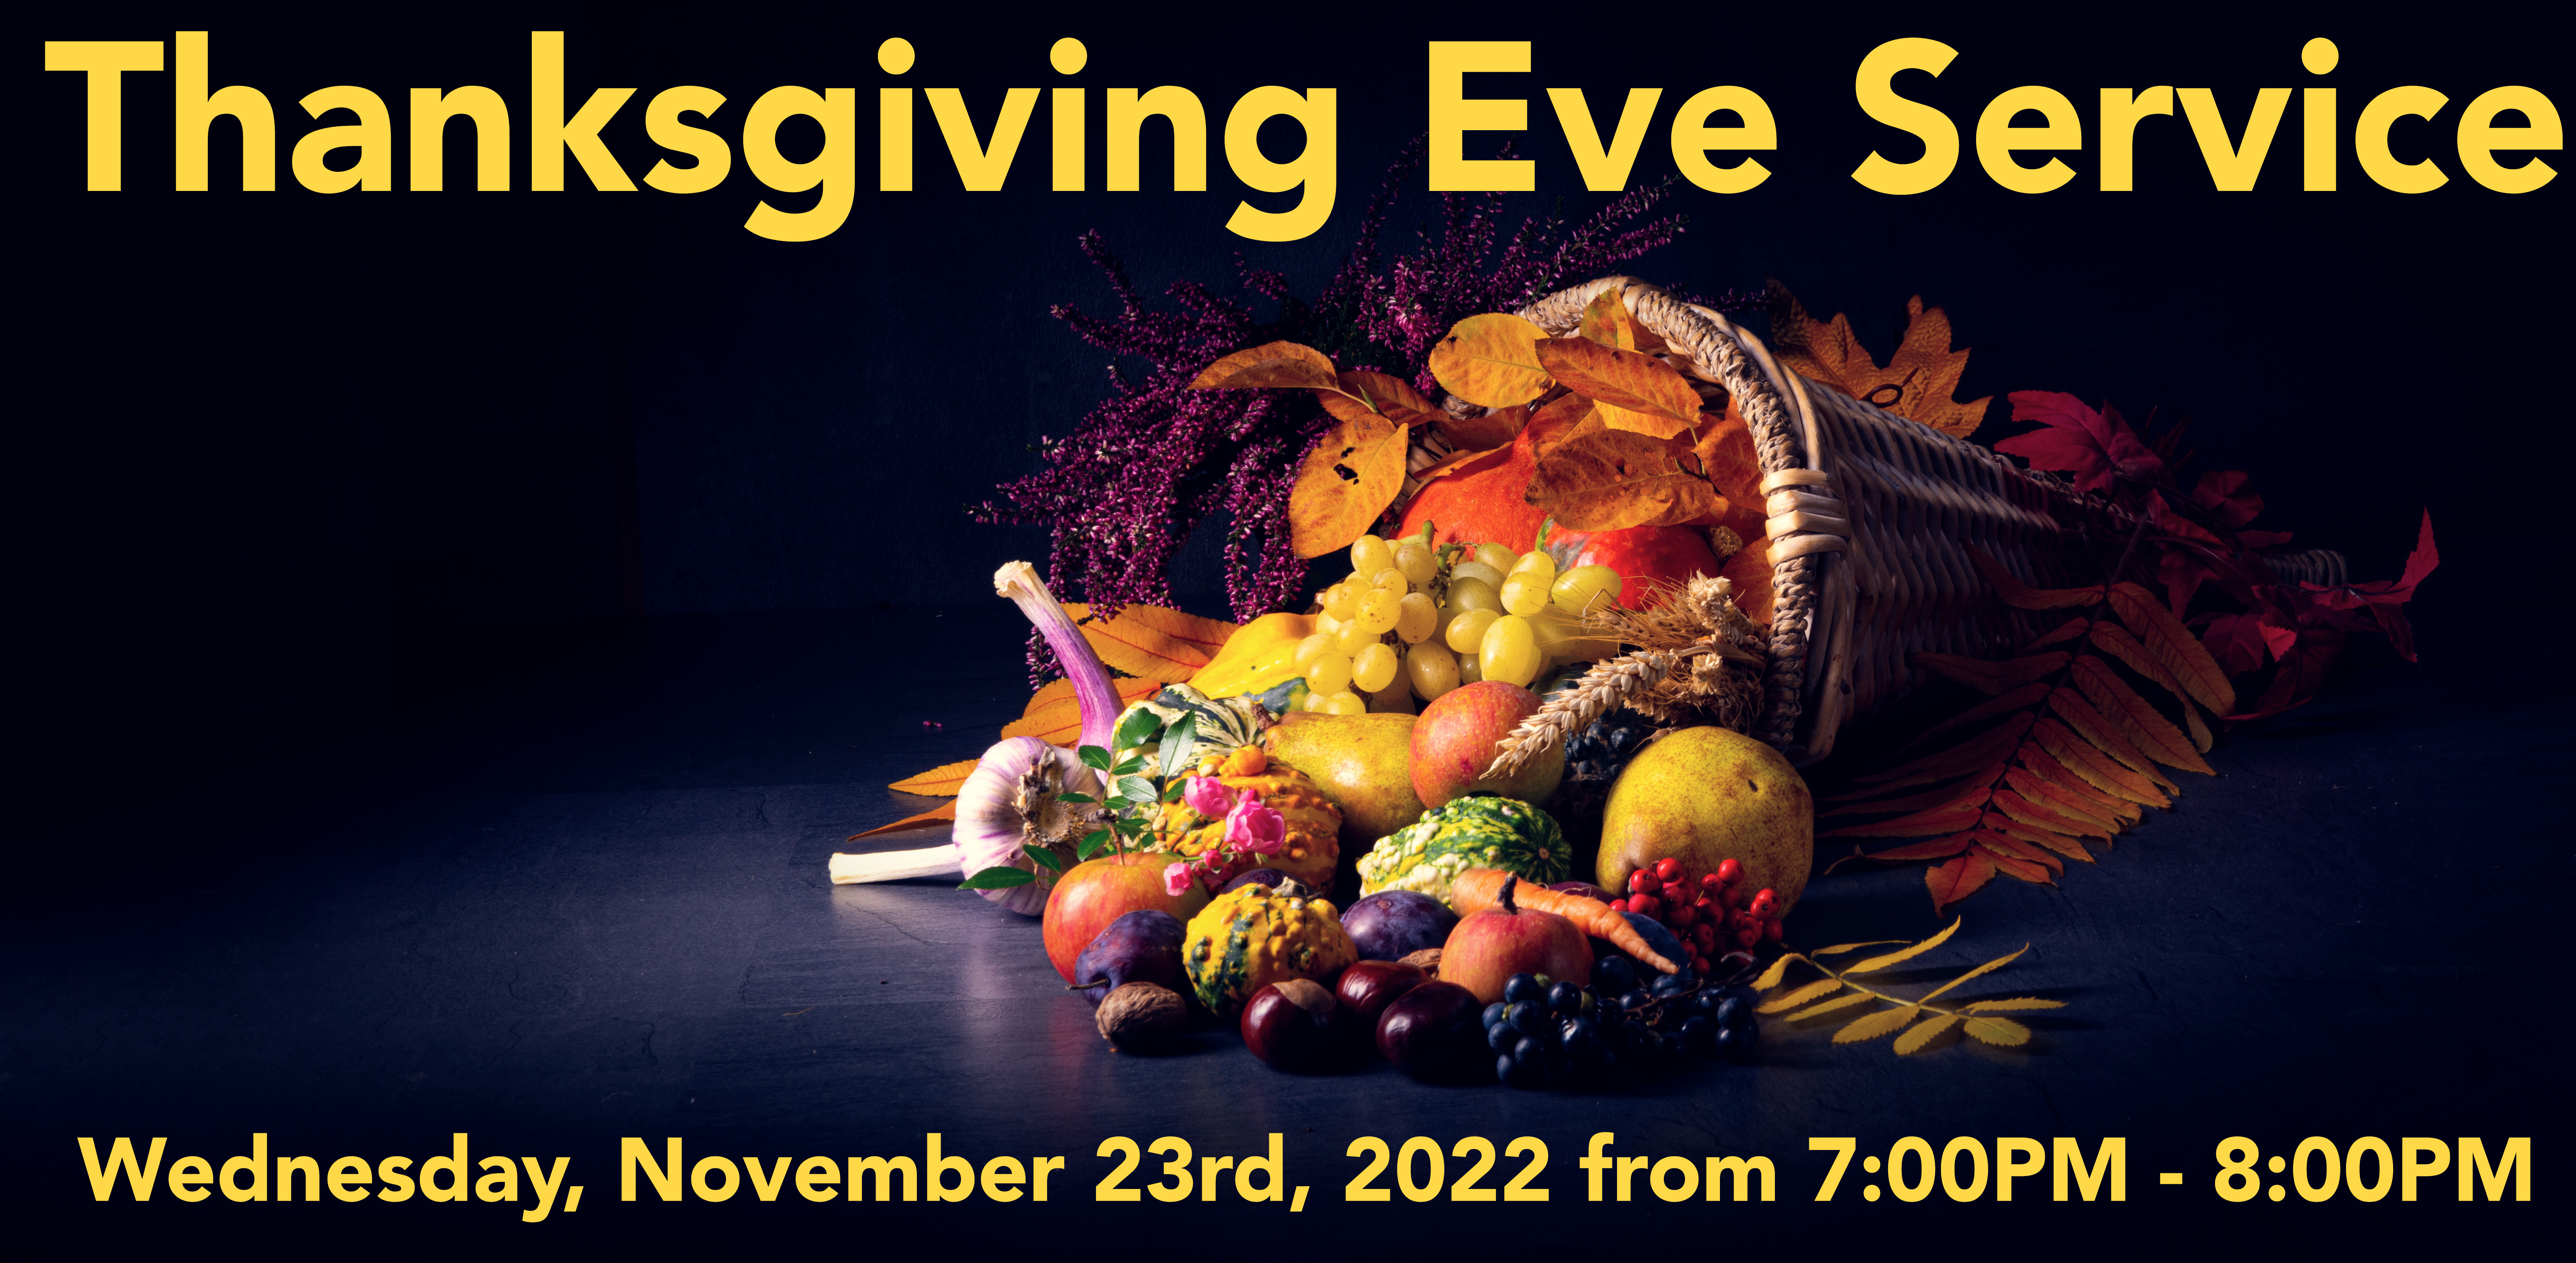 Thanksgiving Eve service 2022